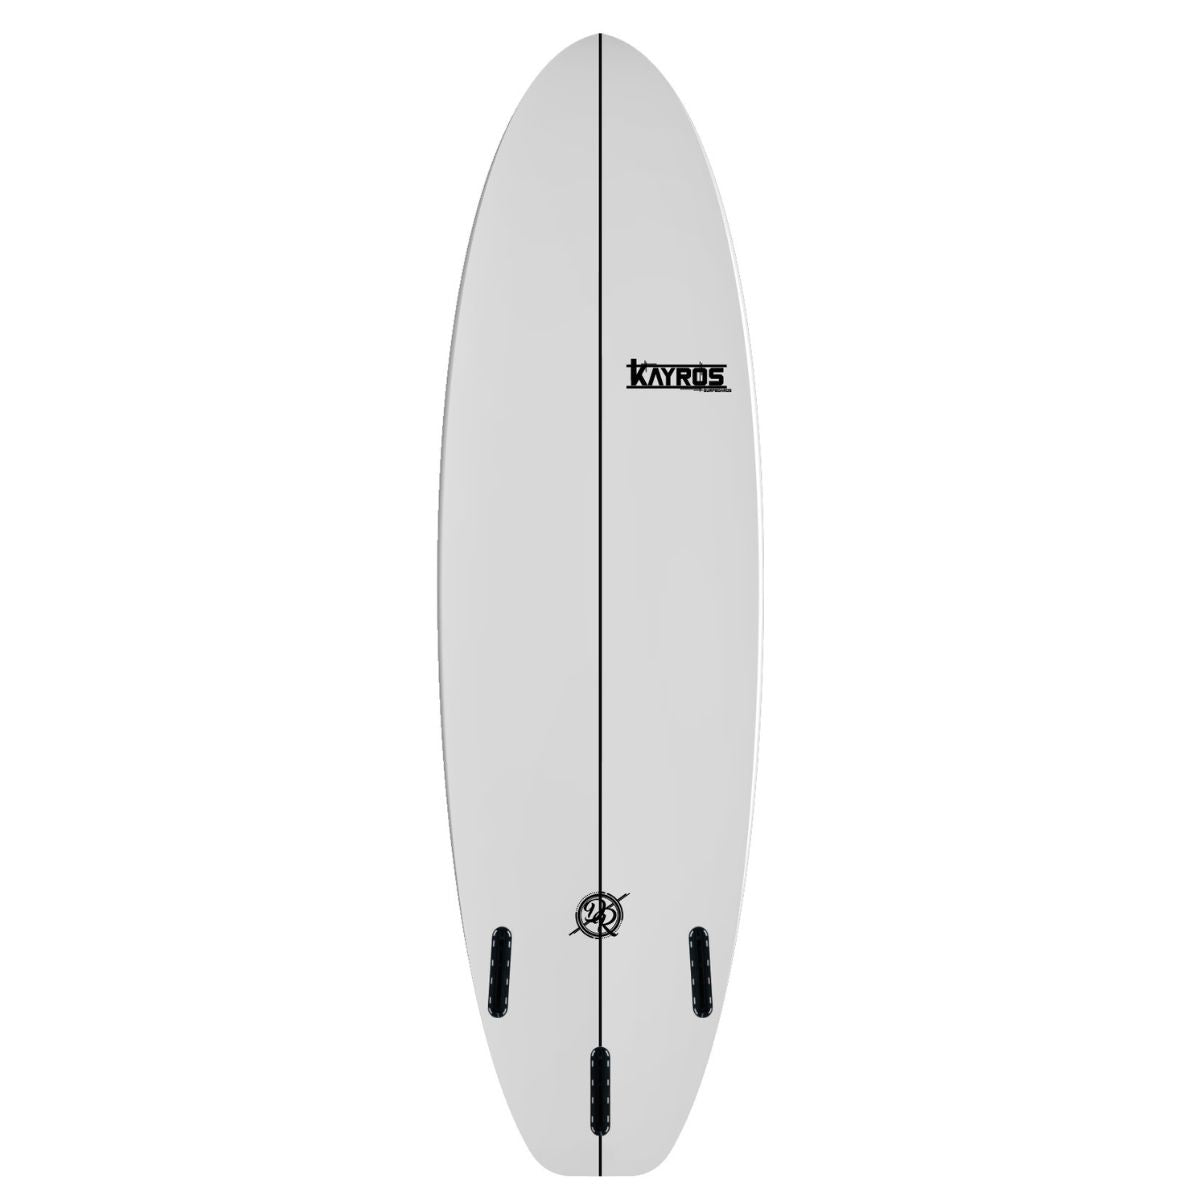 Evo 4x4 | Kayros Surfboards